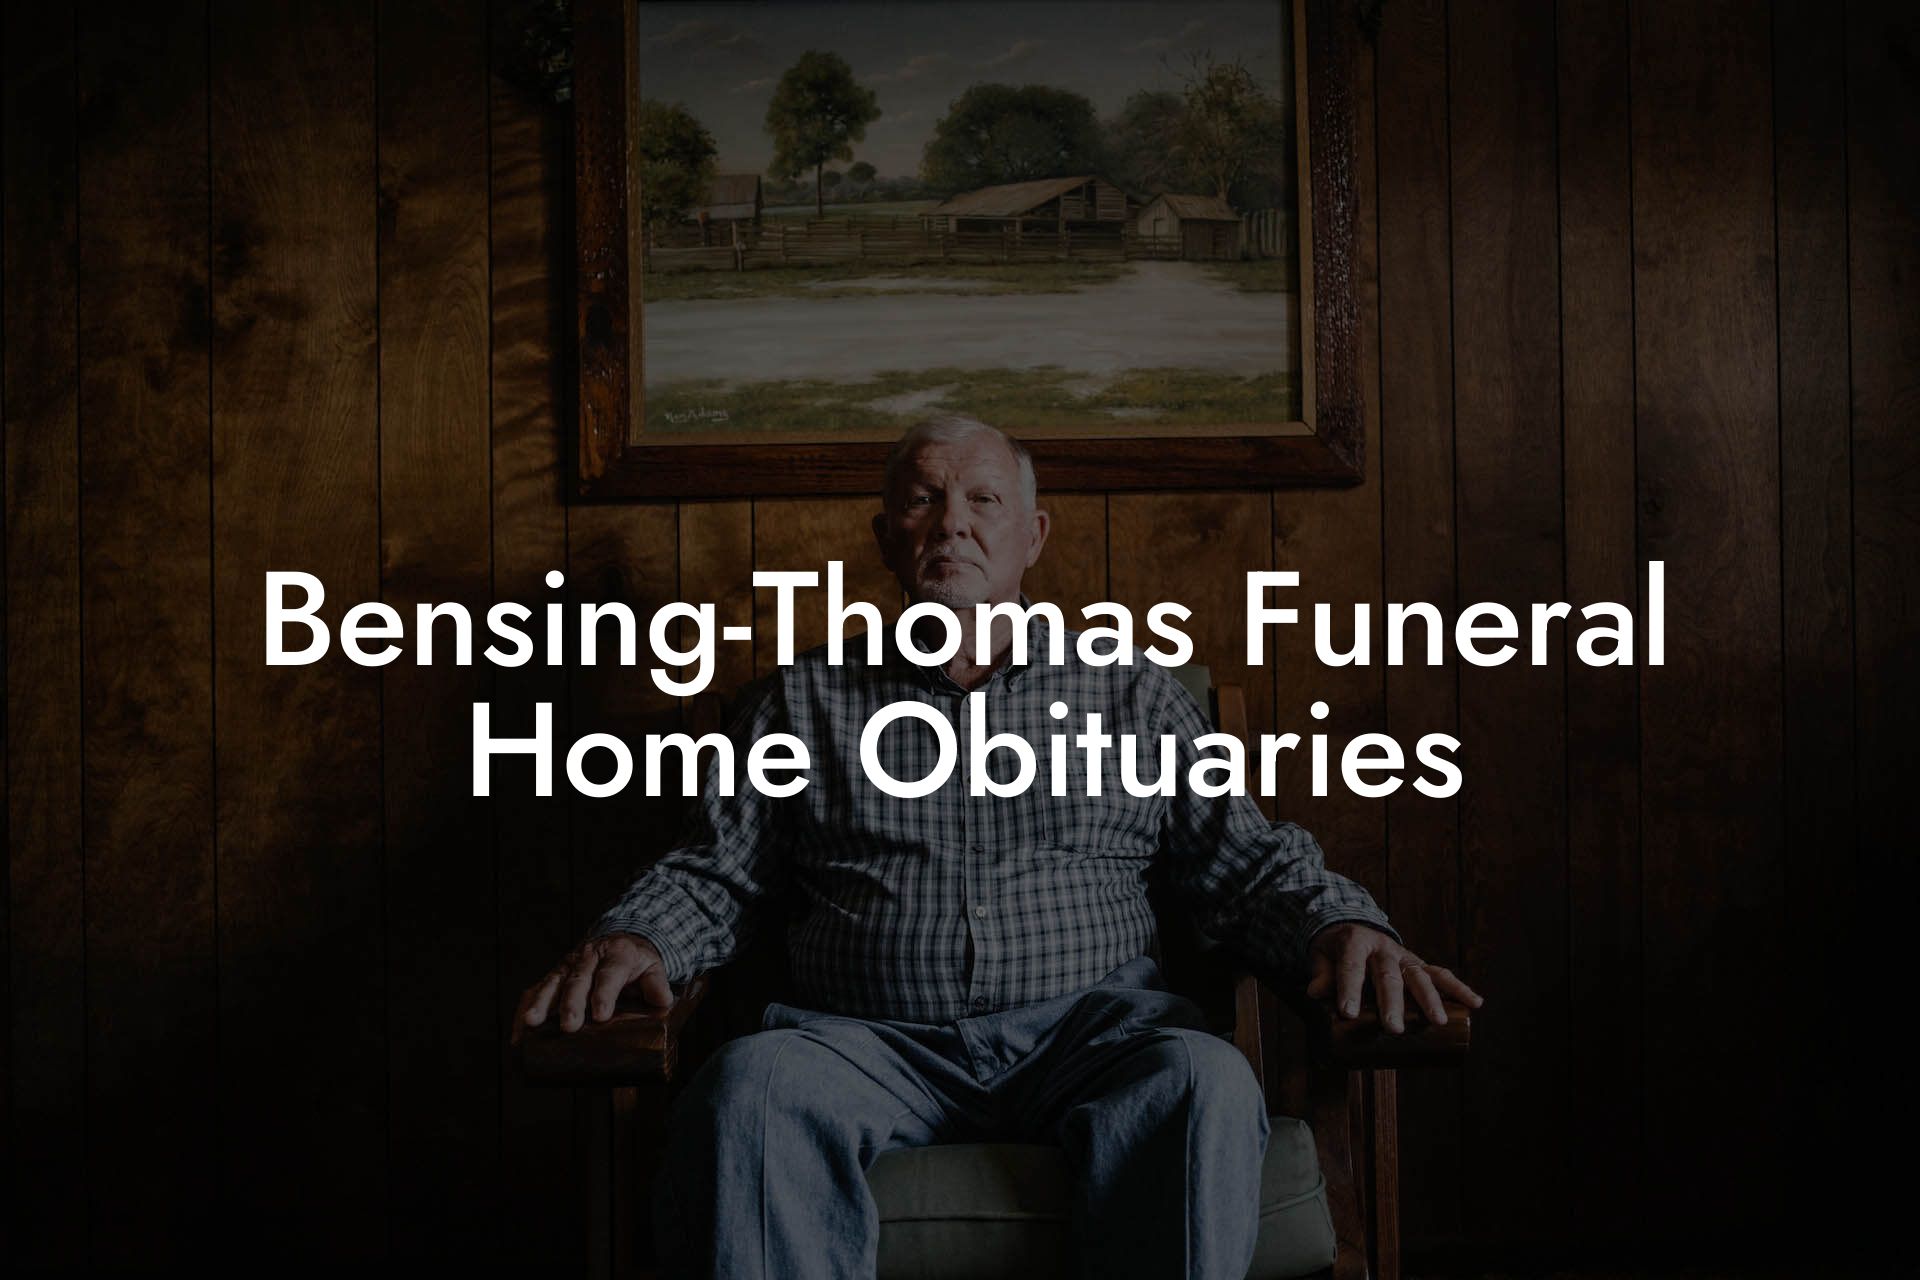 Bensing-Thomas Funeral Home Obituaries